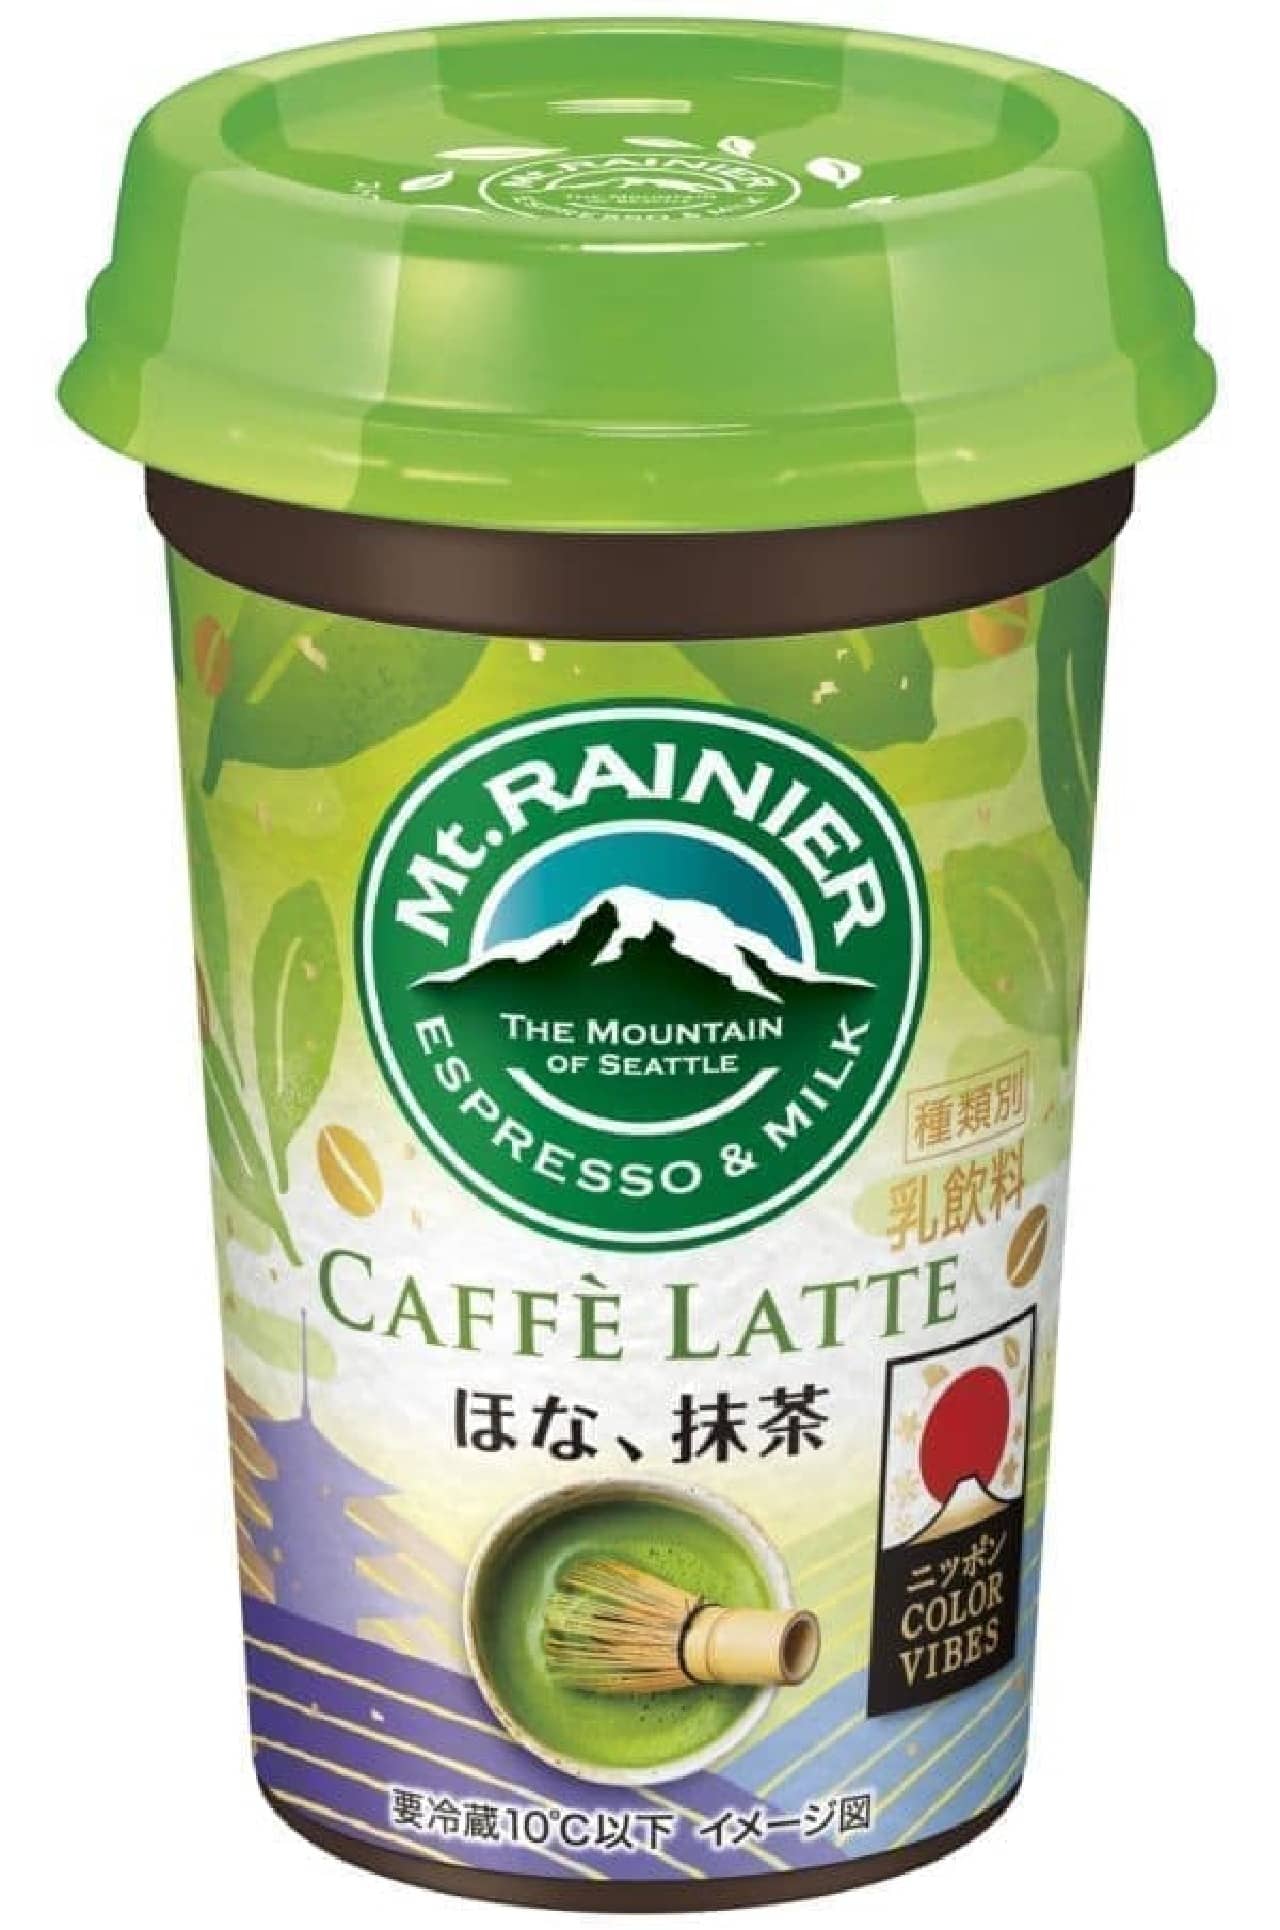 Morinaga Milk Industry "Mount Rainier Cafe Latte Hona, Matcha"